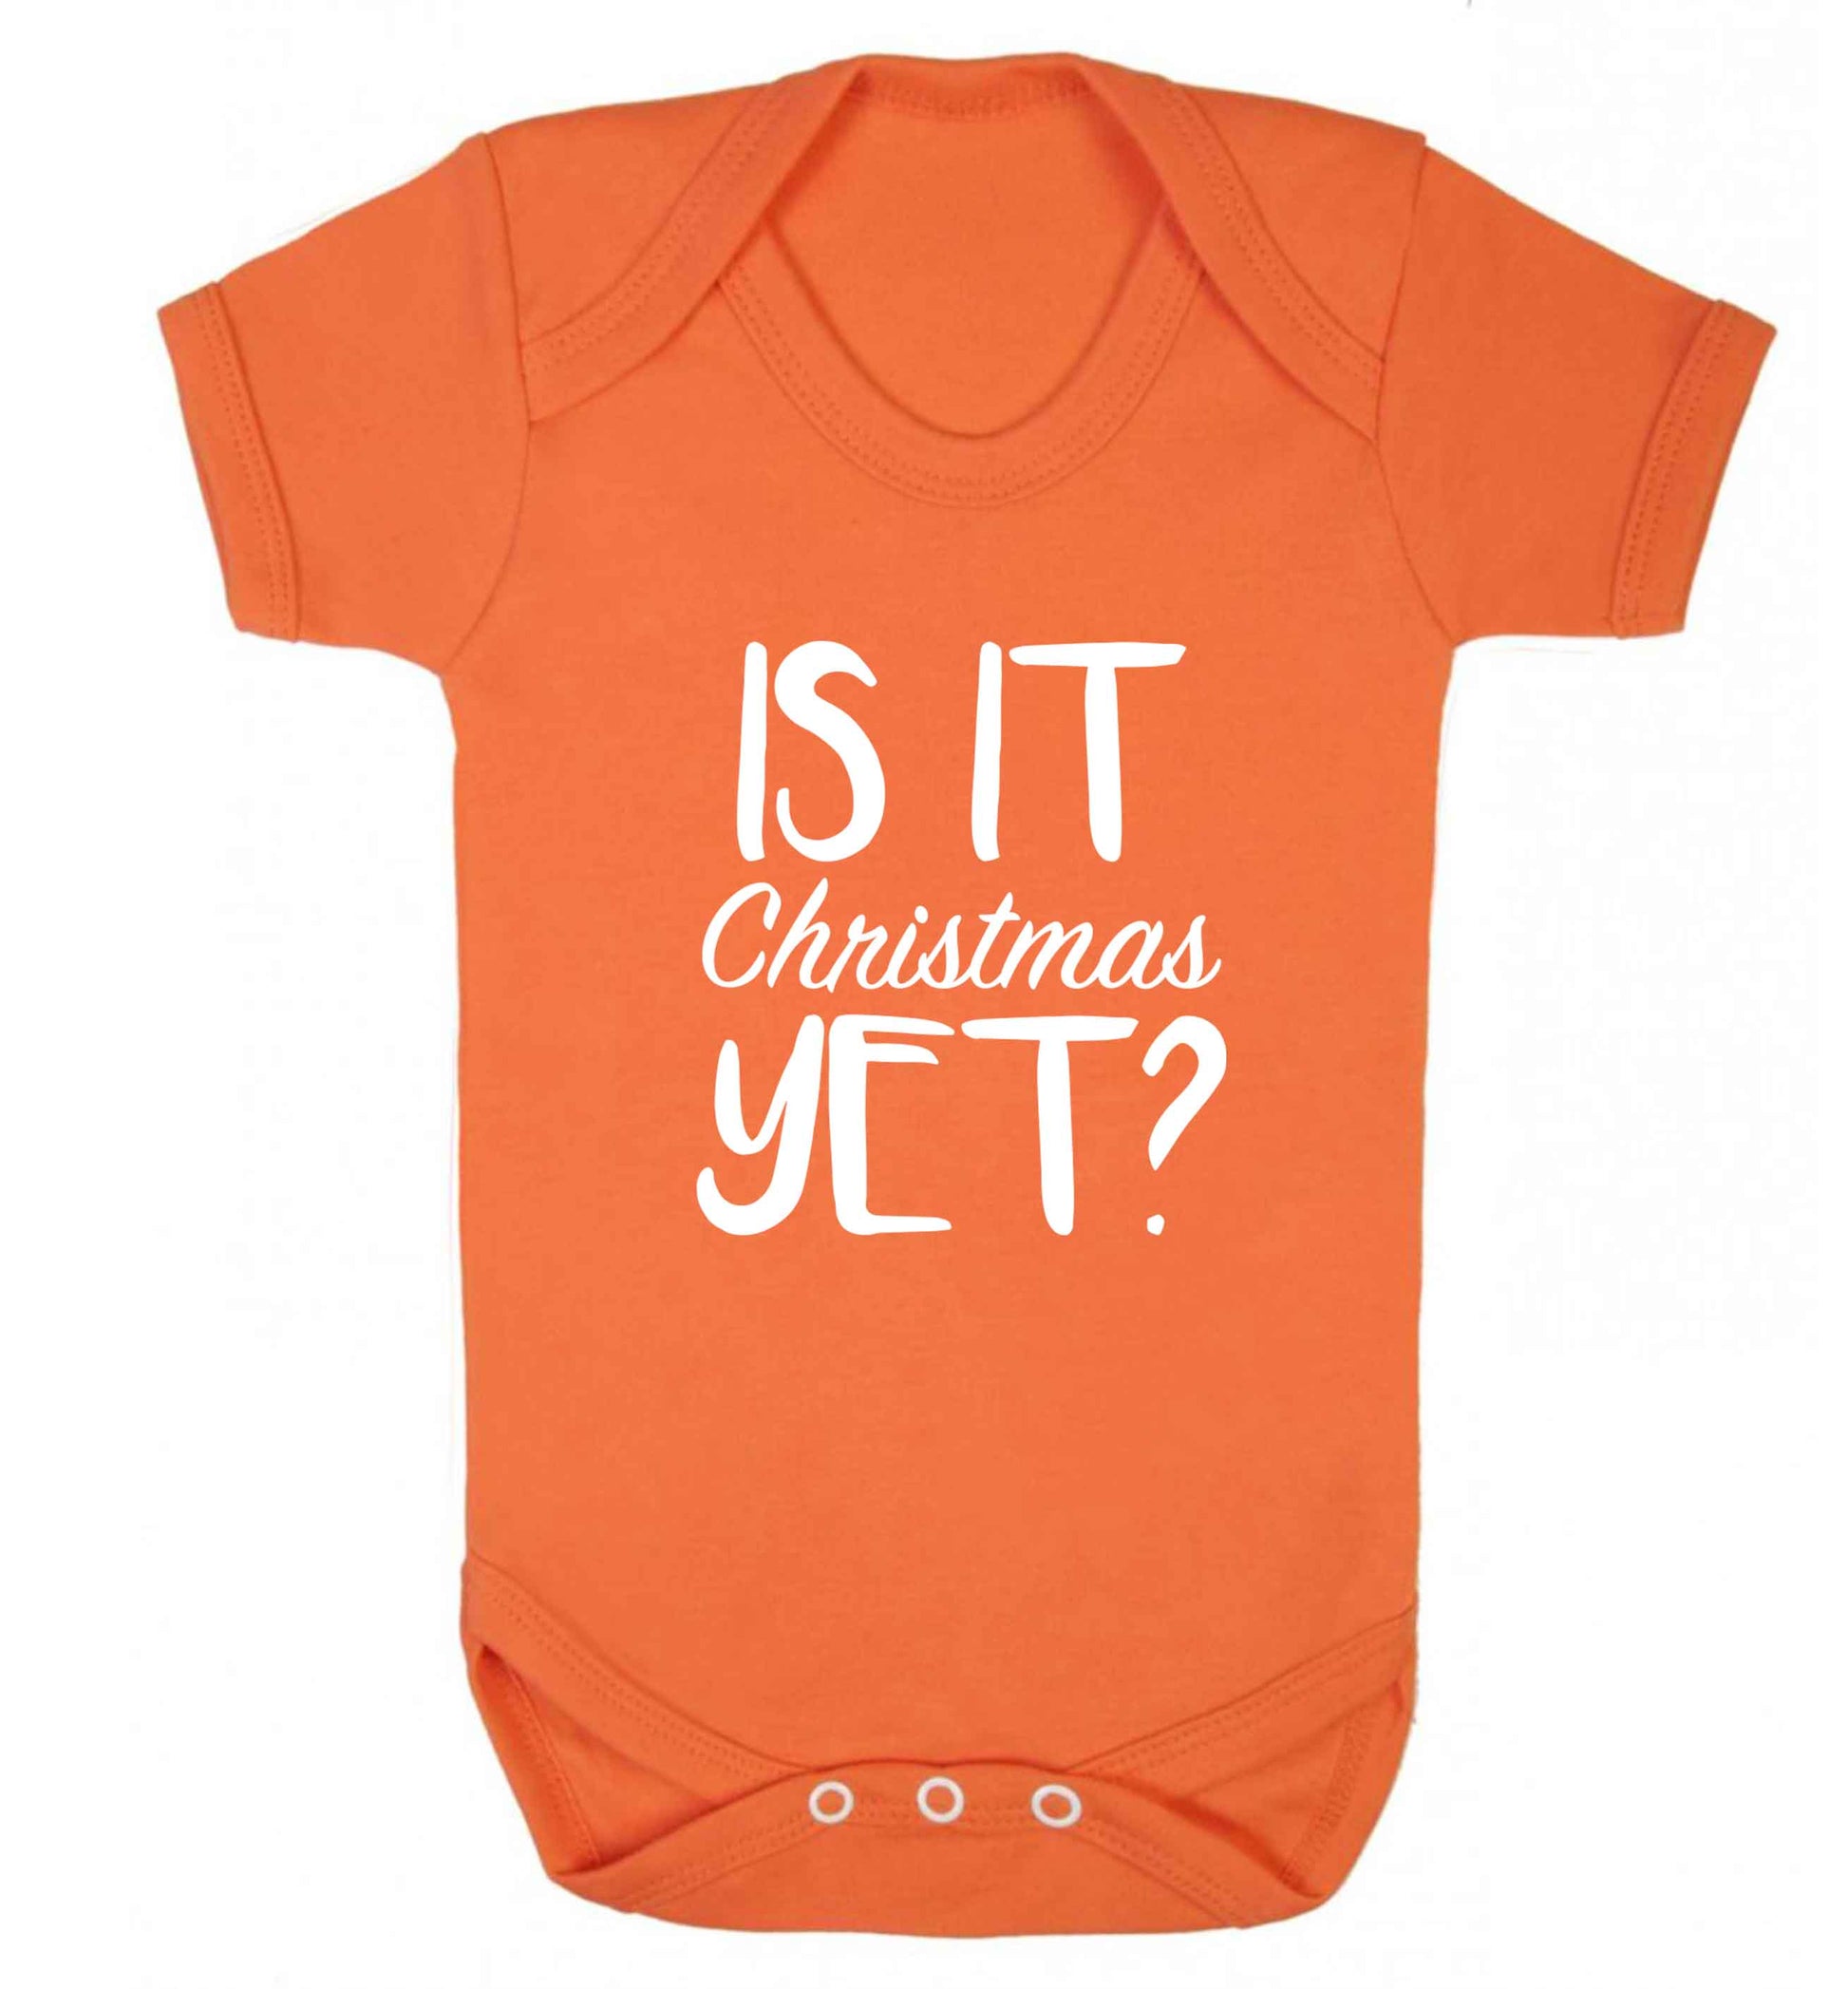 Is it Christmas yet? baby vest orange 18-24 months